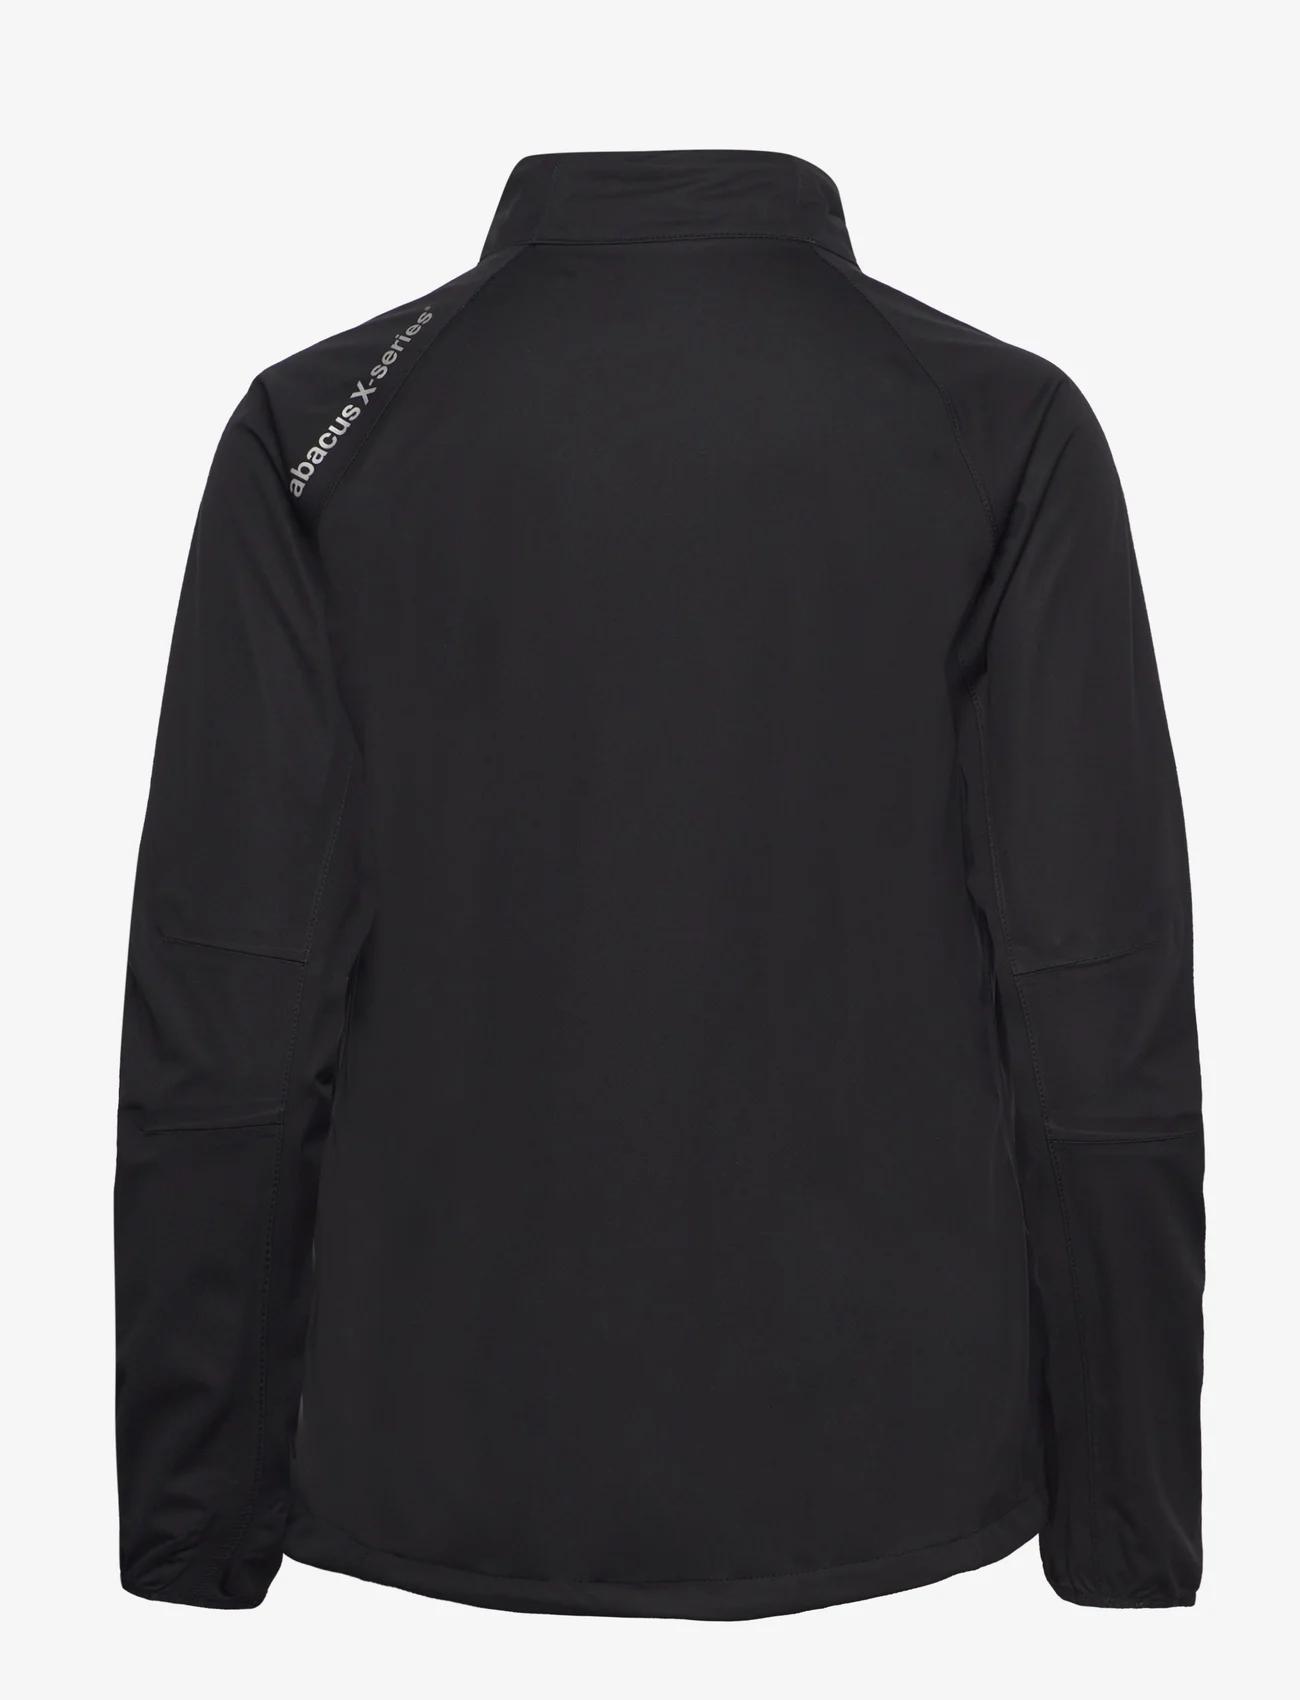 Abacus - Lds PDX waterproof jacket - golf jackets - black - 1